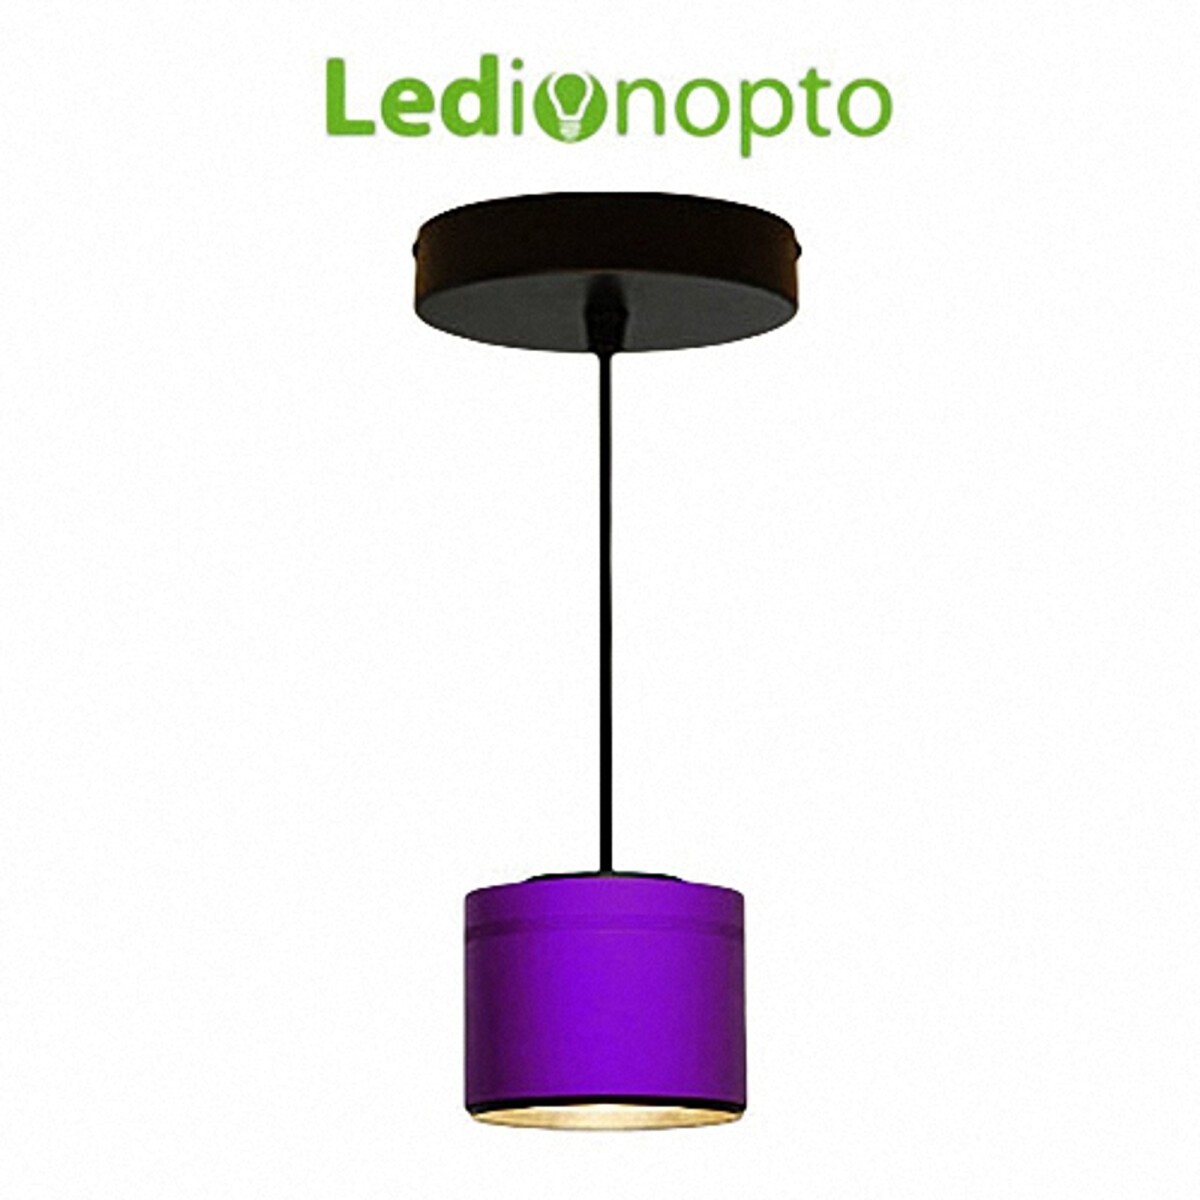 Ledion - Lampara Led Pendant Lighting - 17W/220V. 3000K - 001 